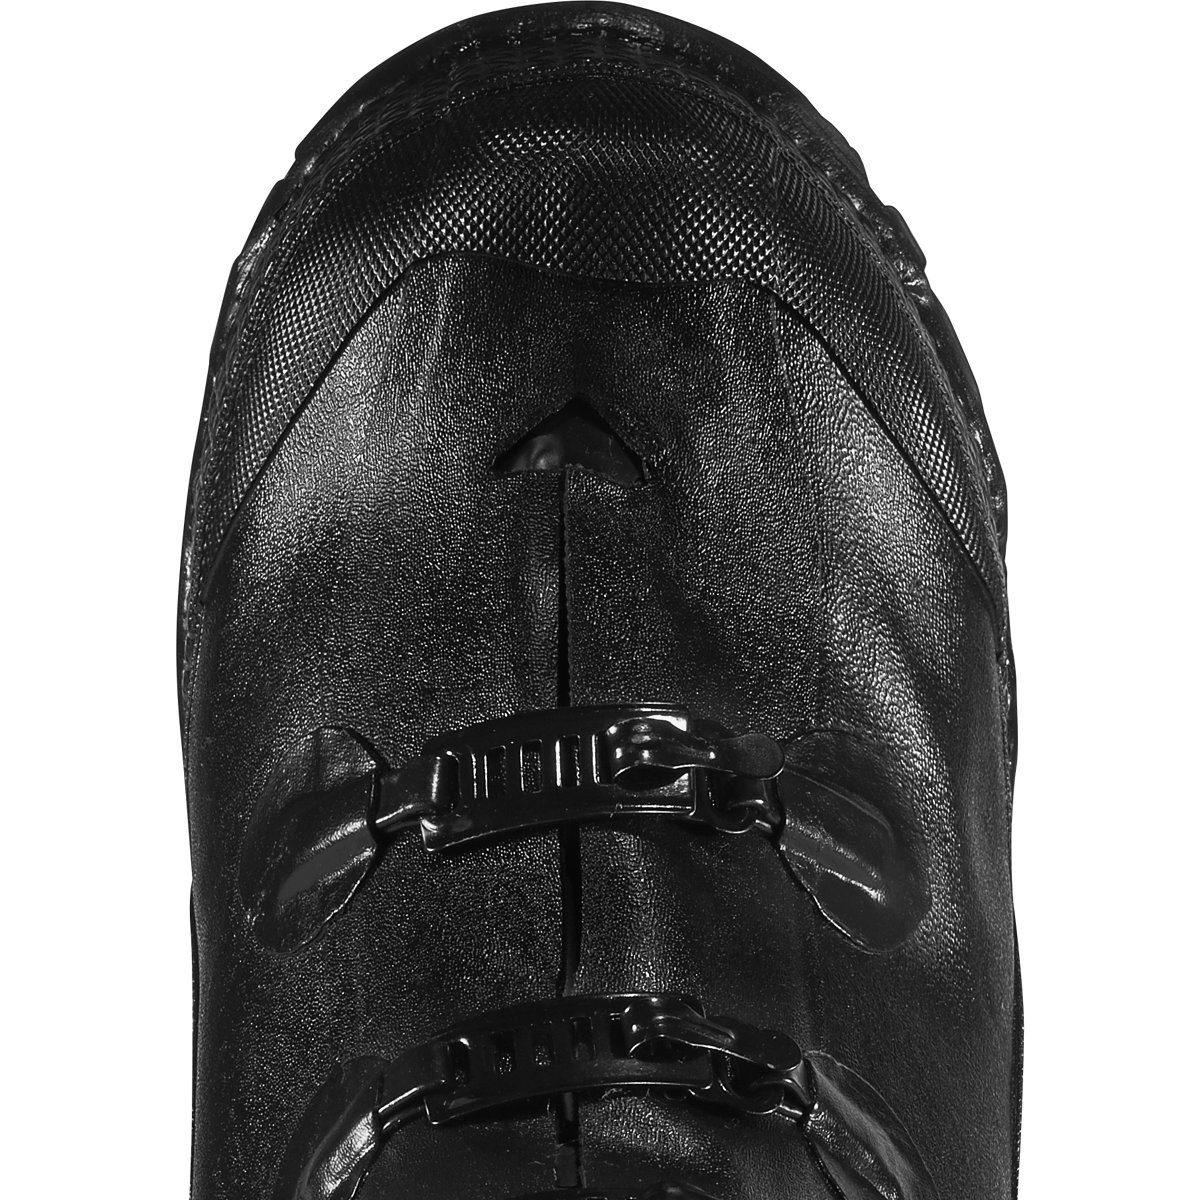 LaCrosse Footwear - ZXT Buckle Overshoe Deep Heel 14